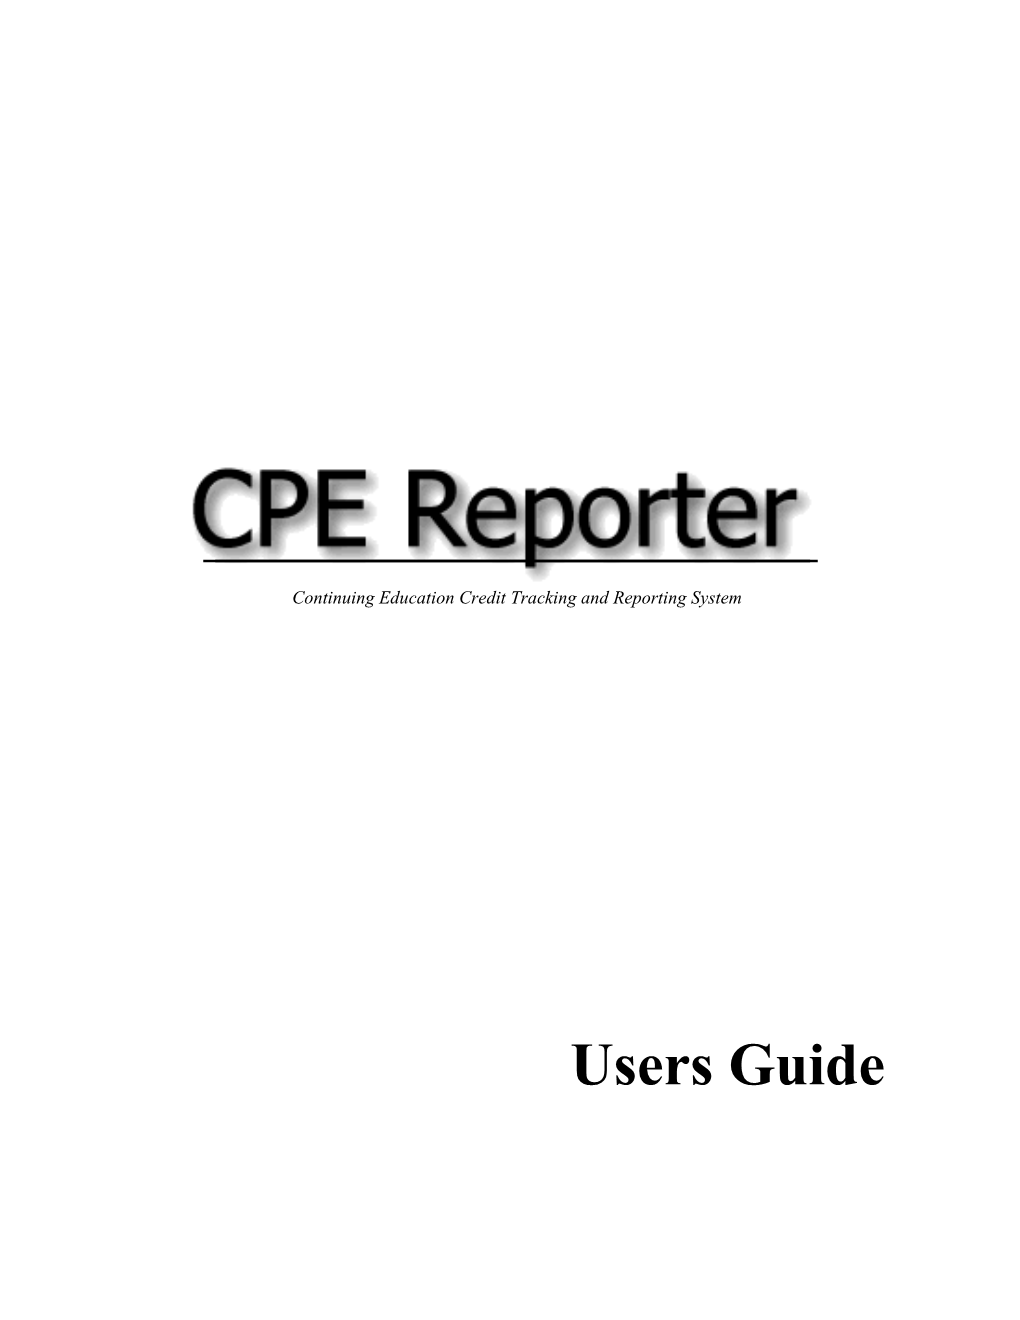 CPE Reporter Users Guide